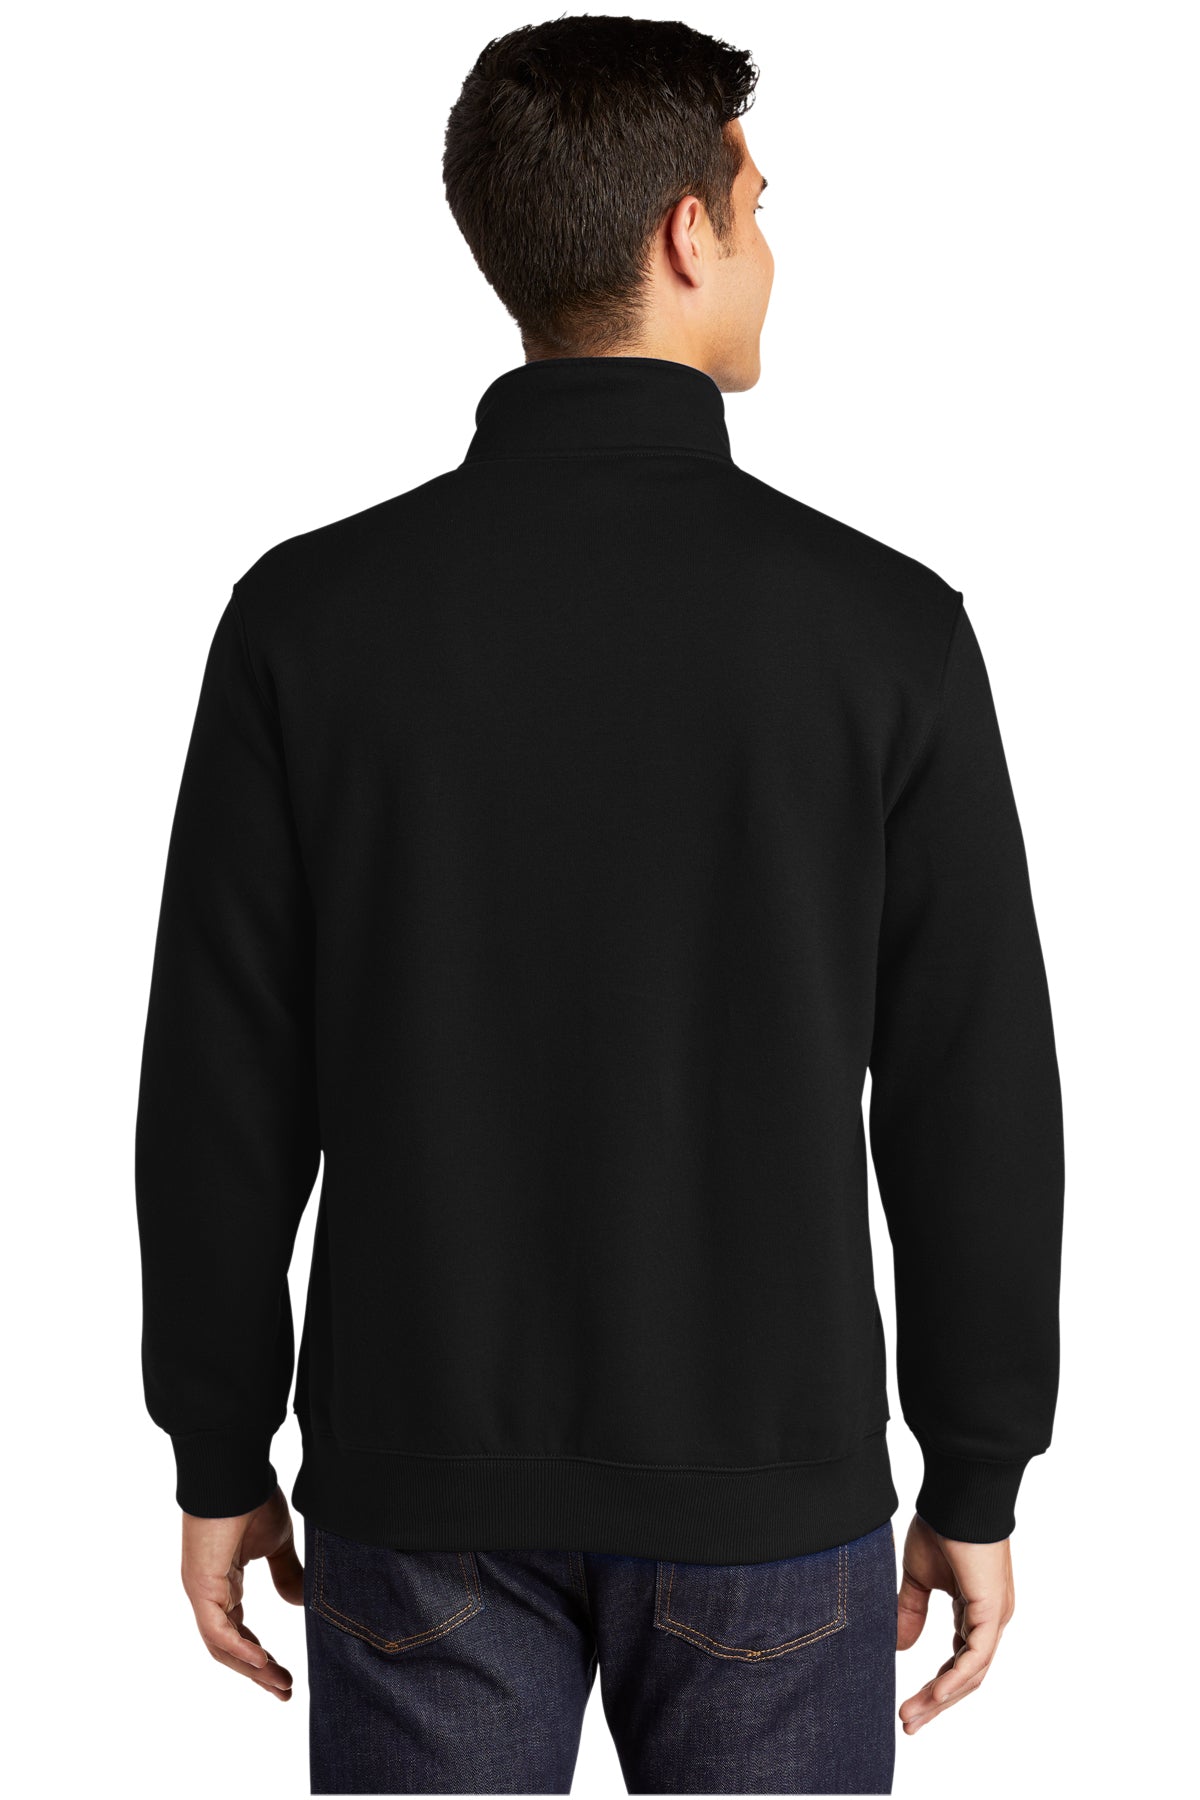 sport-tek_tst253 _black_company_logo_sweatshirts